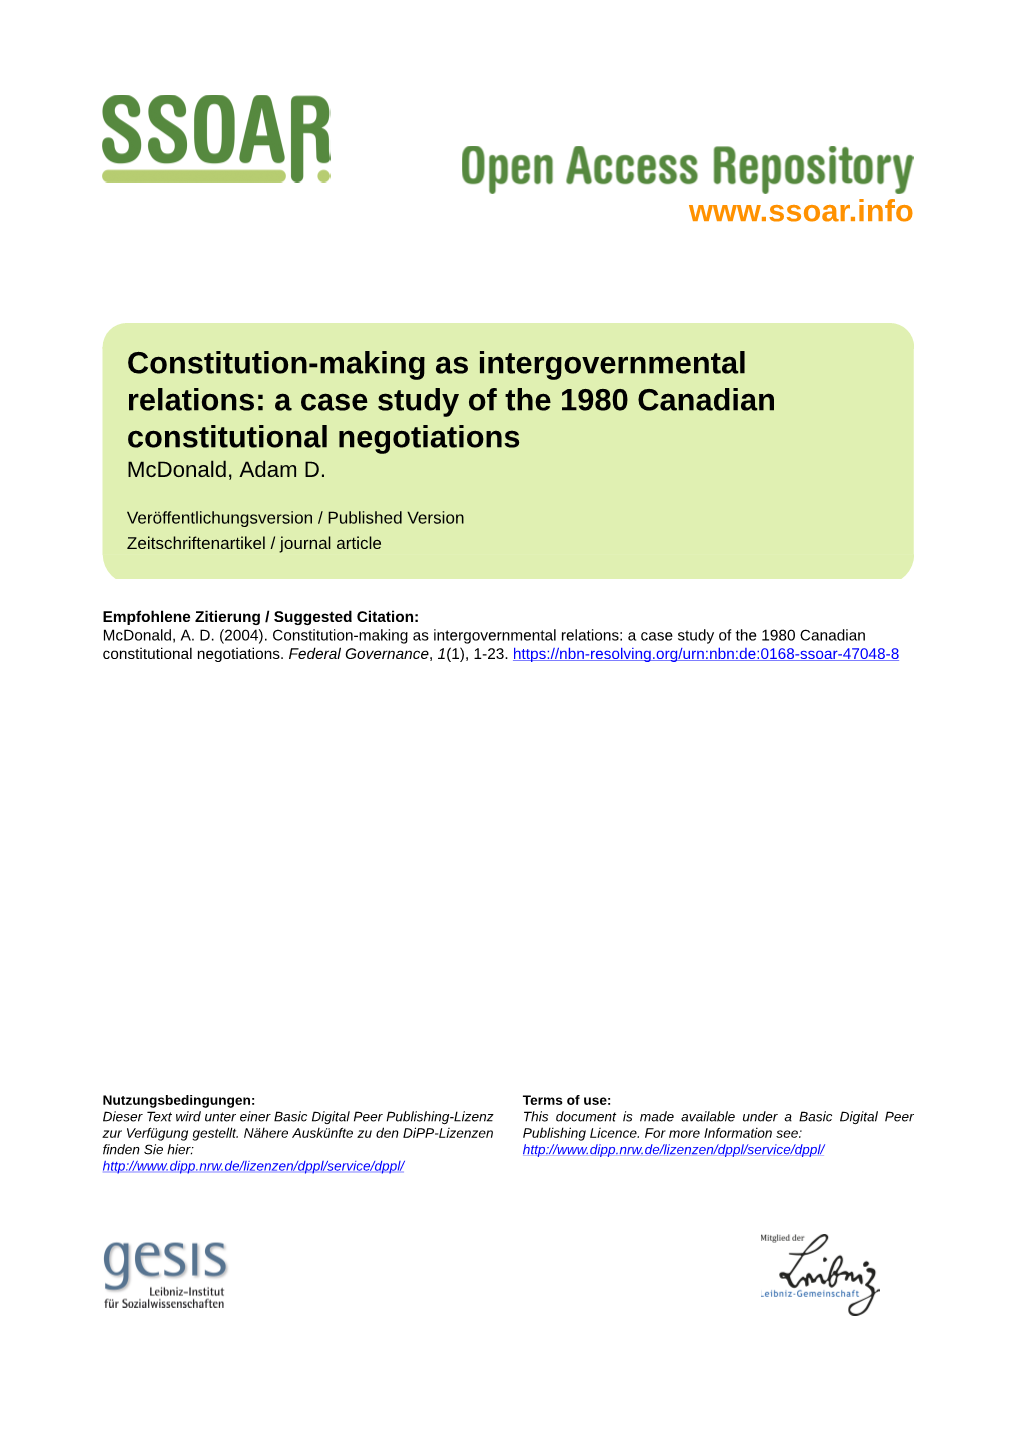 A Case Study of the 1980 Canadian Constitutional Negotiations Mcdonald, Adam D